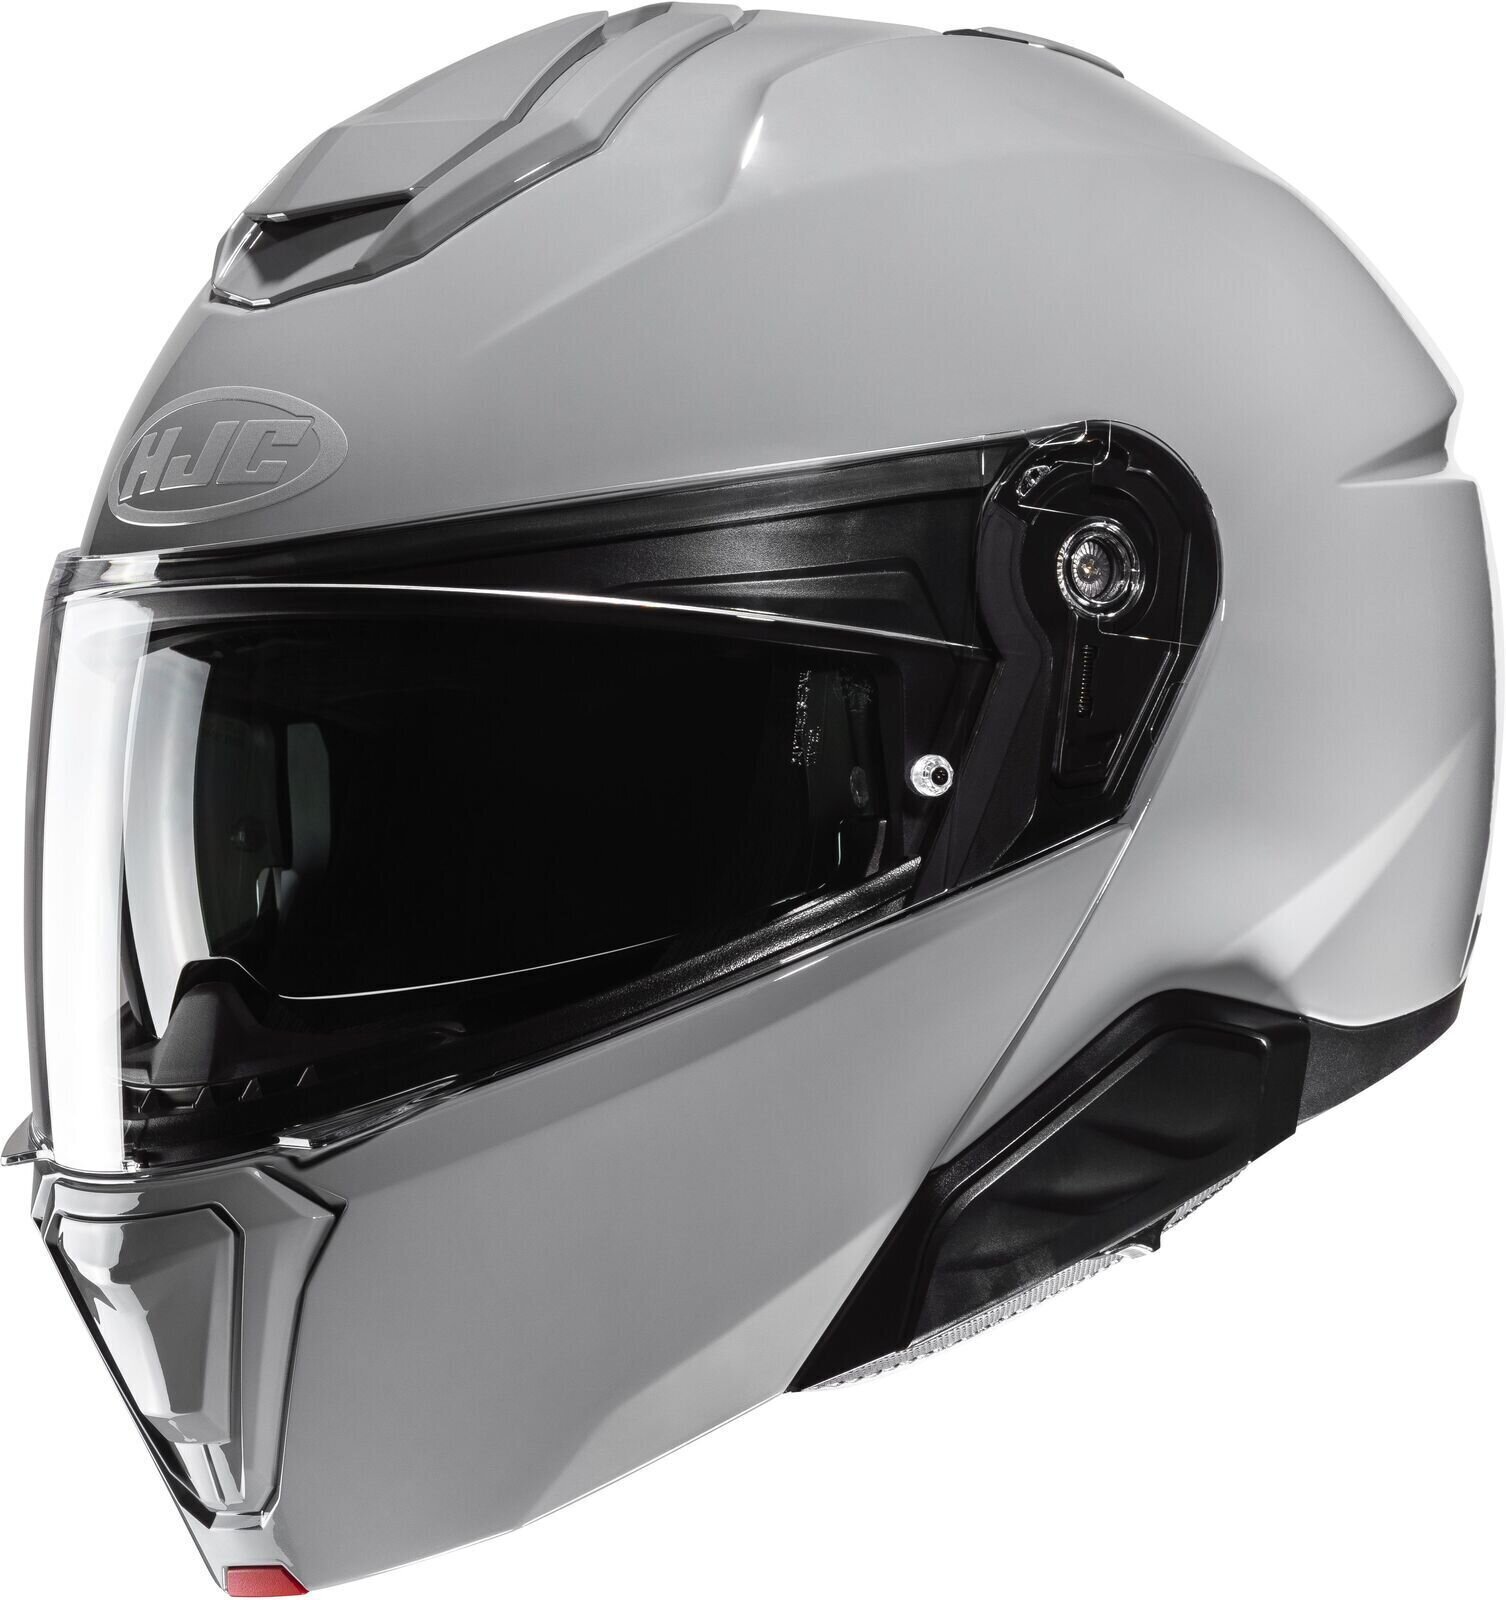 Helm HJC i91 Solid N.Grey M Helm